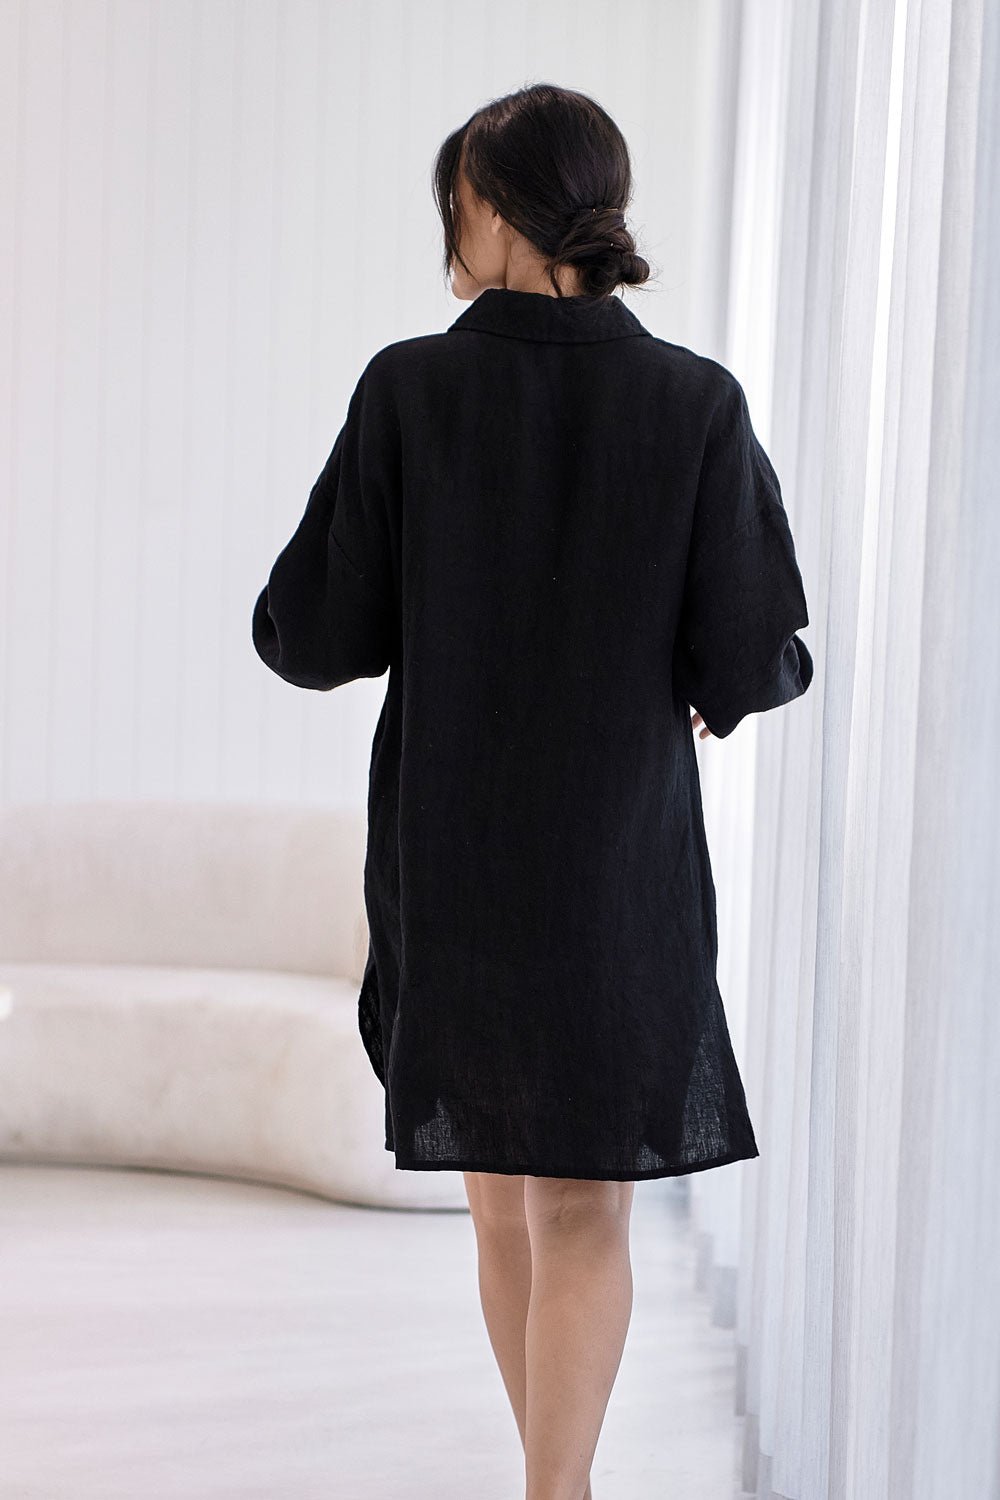 Linen Shift Dress - Black  - Eadie Lifestyle